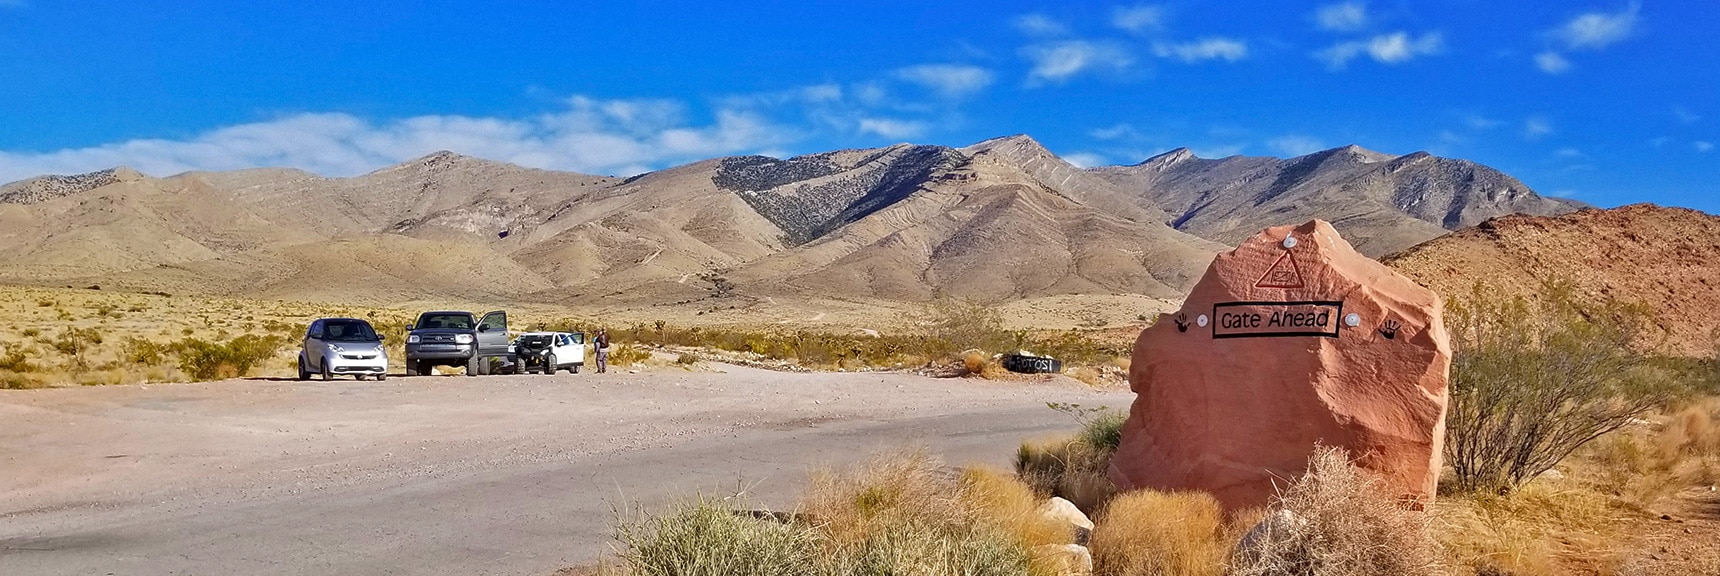 Warning Rock Parking Area at the End of Rainbow Quarry Road. Potosi Mountain Road Ahead | Potosi Mountain Spring Mountains Nevada